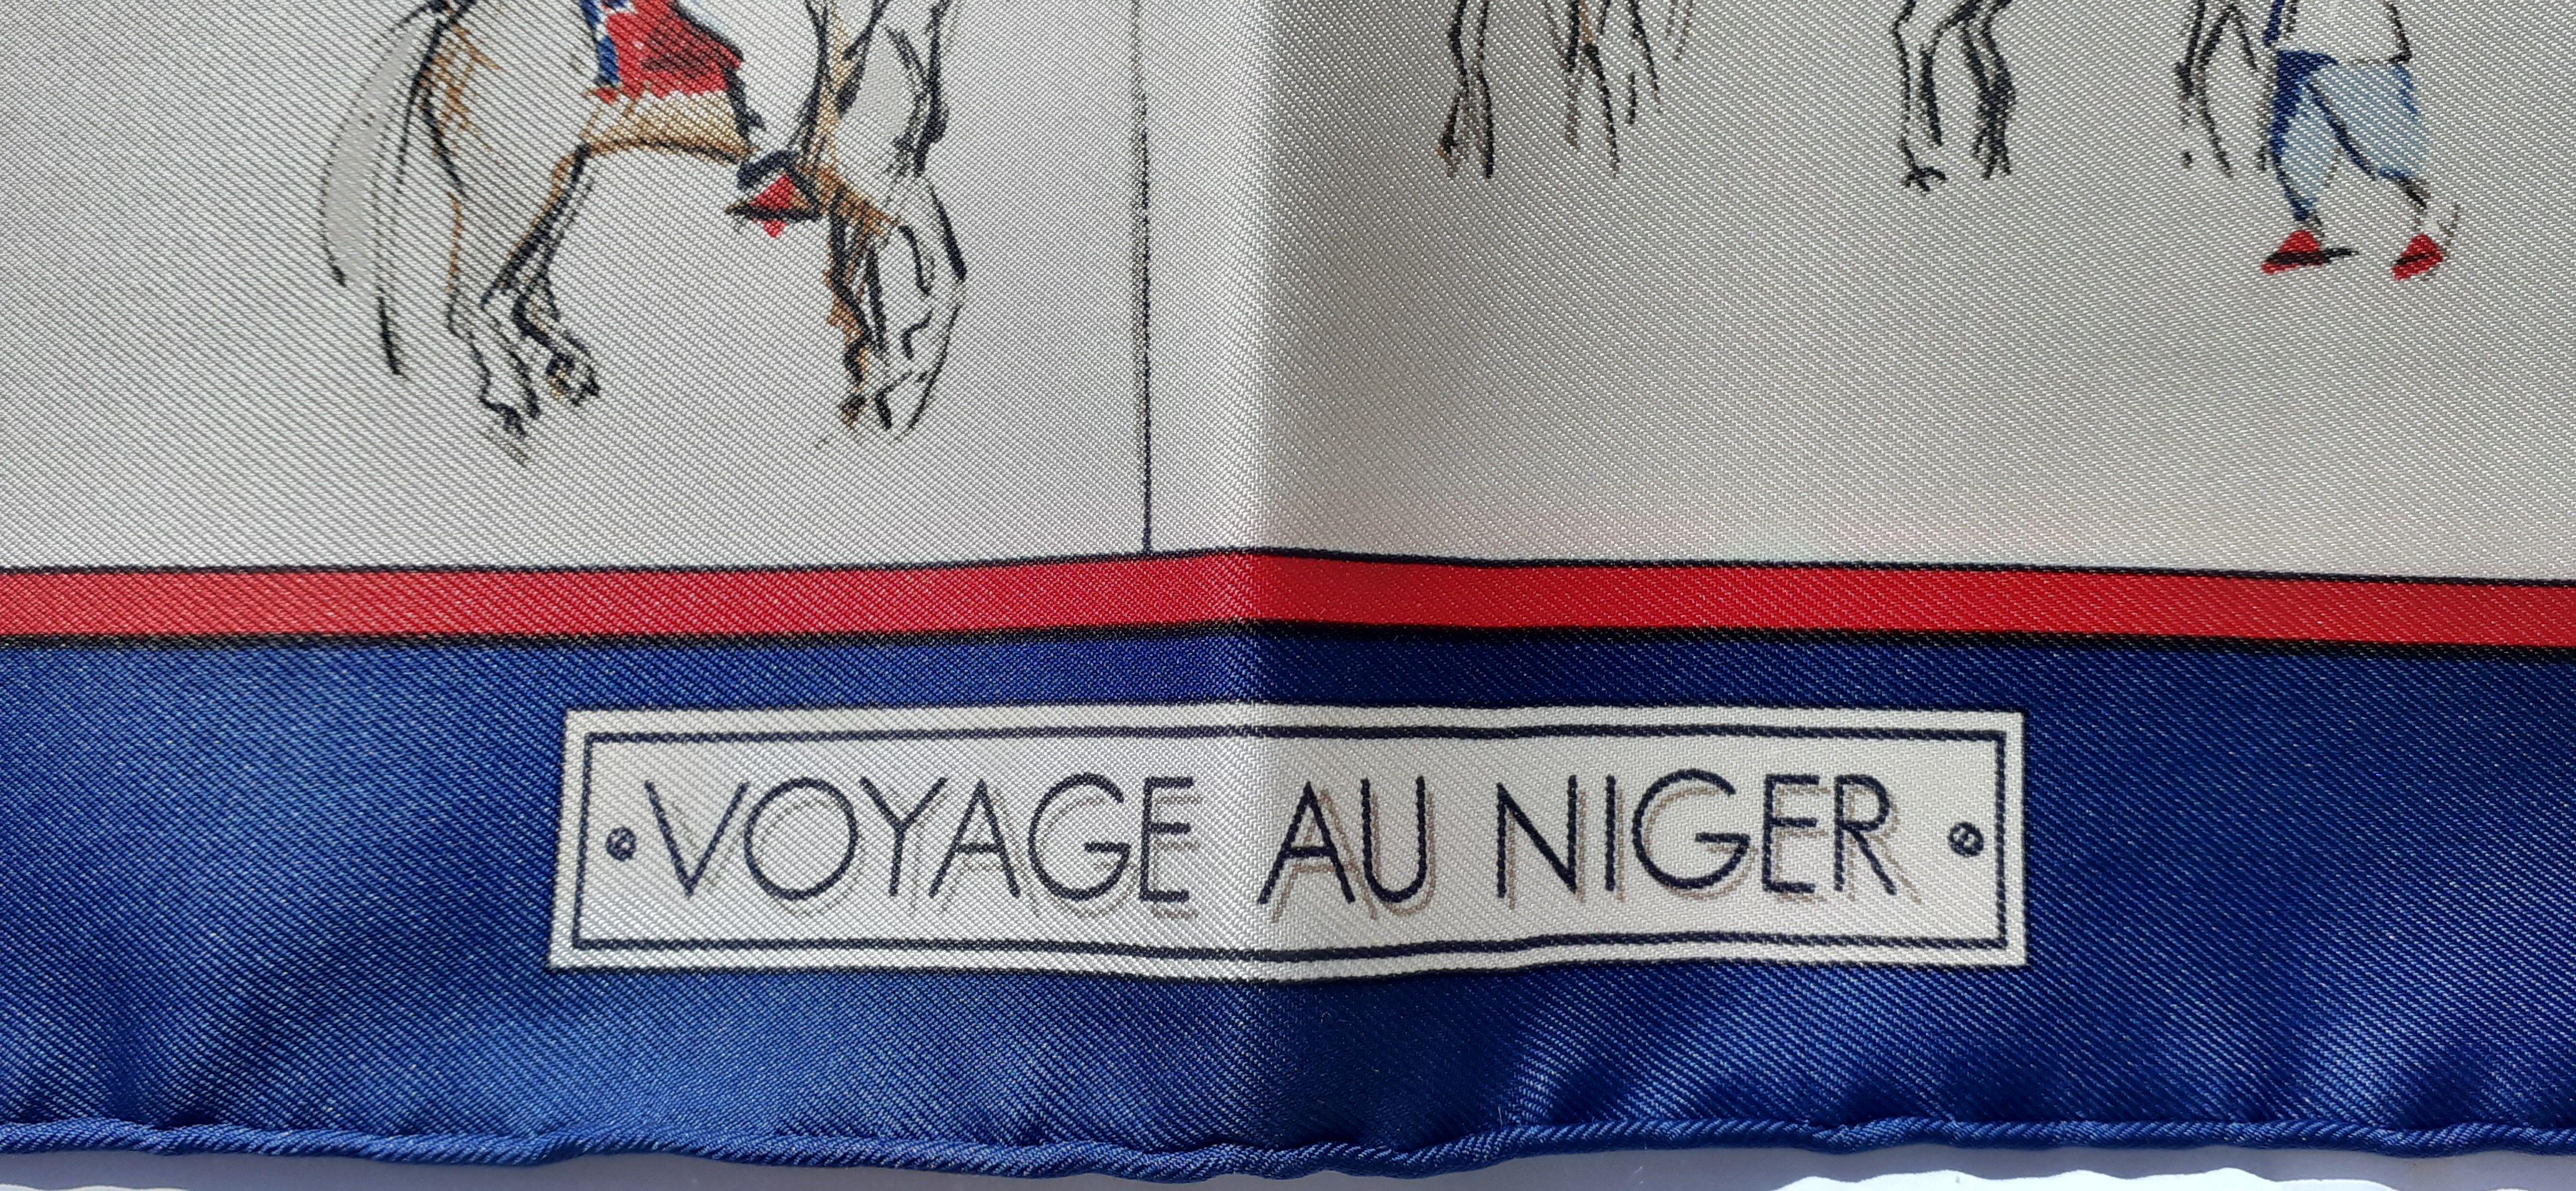 Hermès Gavroche Pocket Square Petite écharpe Voyage au Niger Bleu Beige 42 cm en vente 4